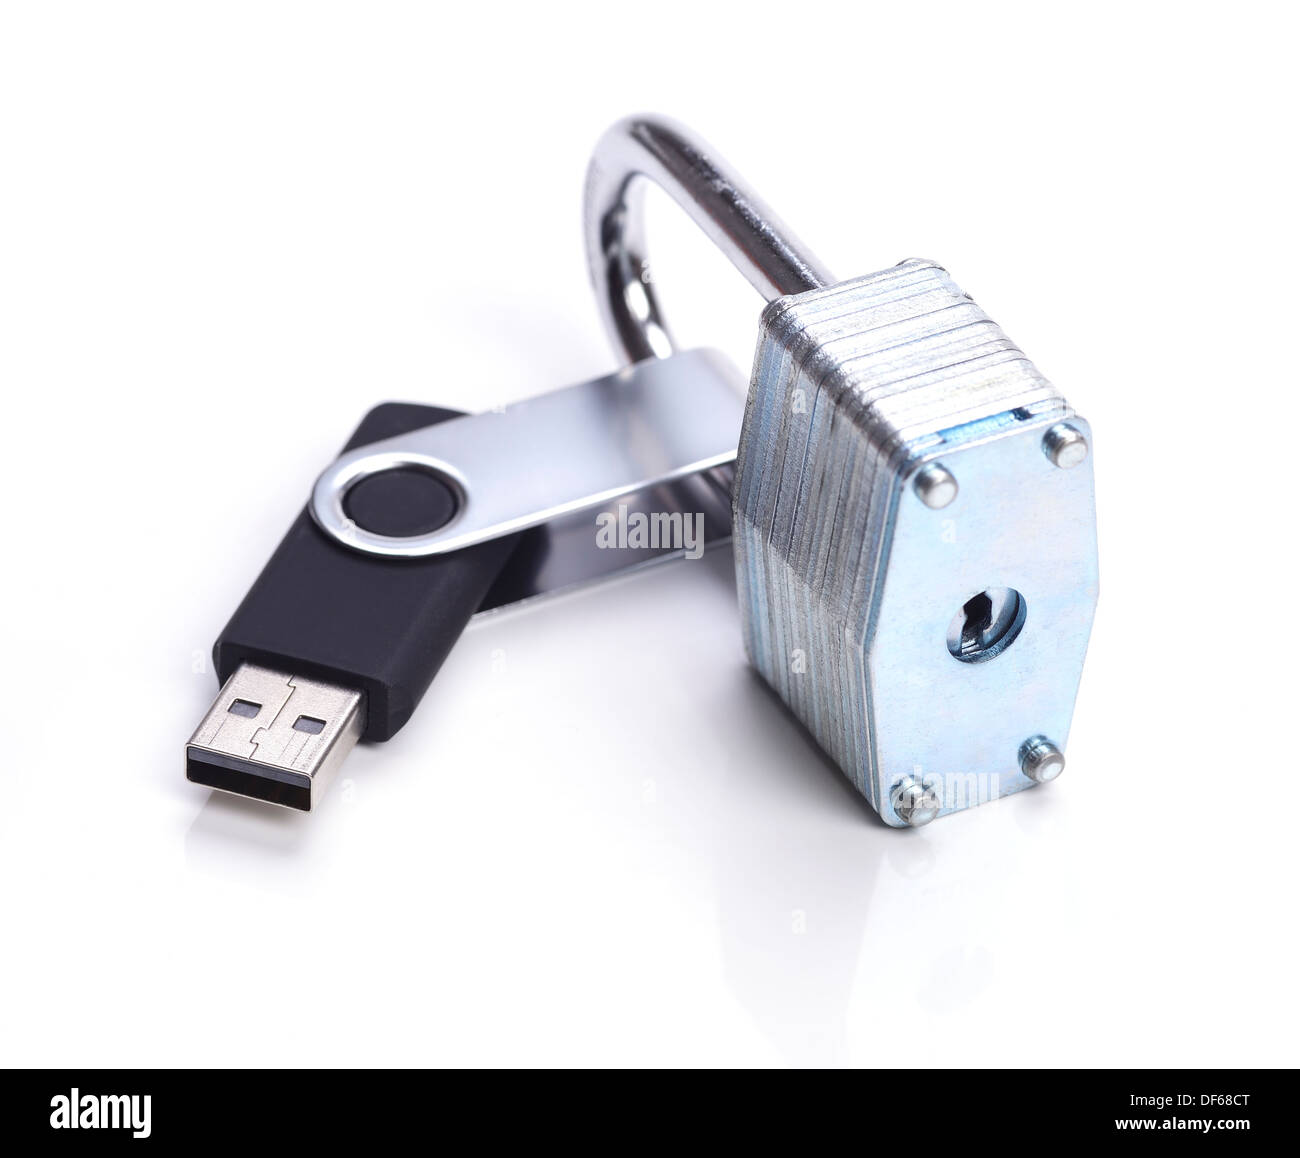 A Pile of Promotional USB Memory Sticks Stock Photo - Alamy